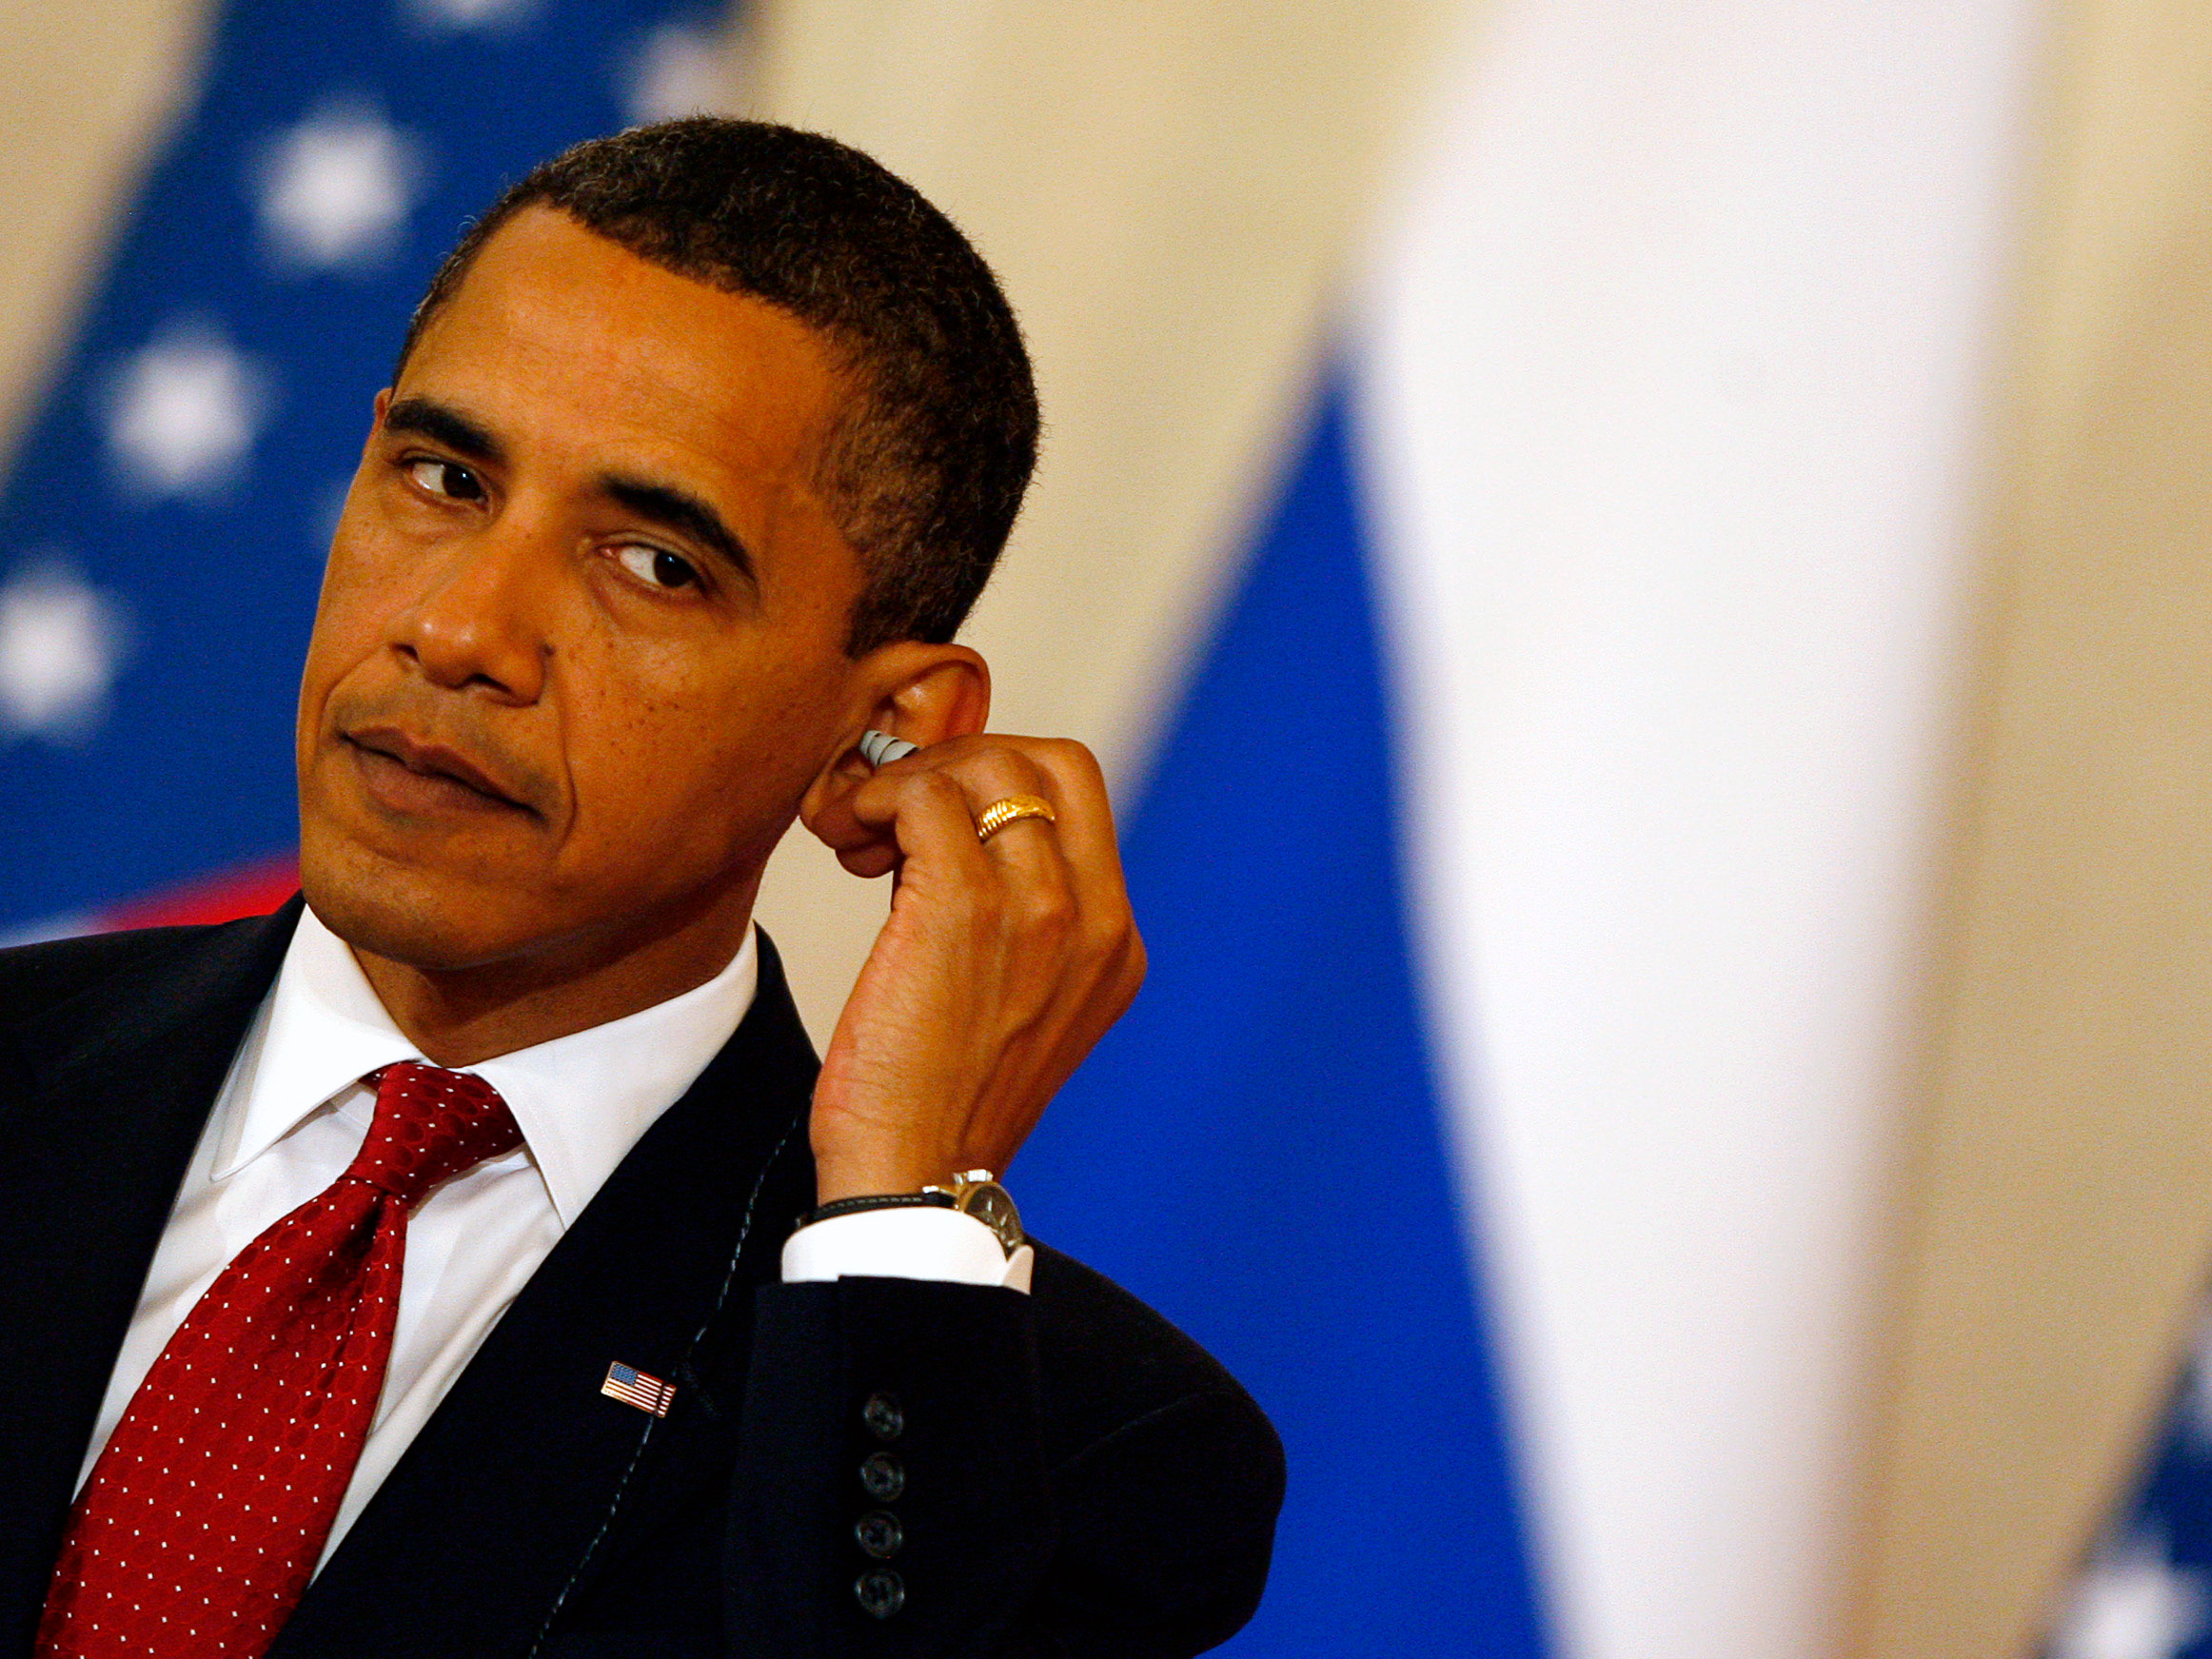 president barack obama translator interpreter ear piece headphones